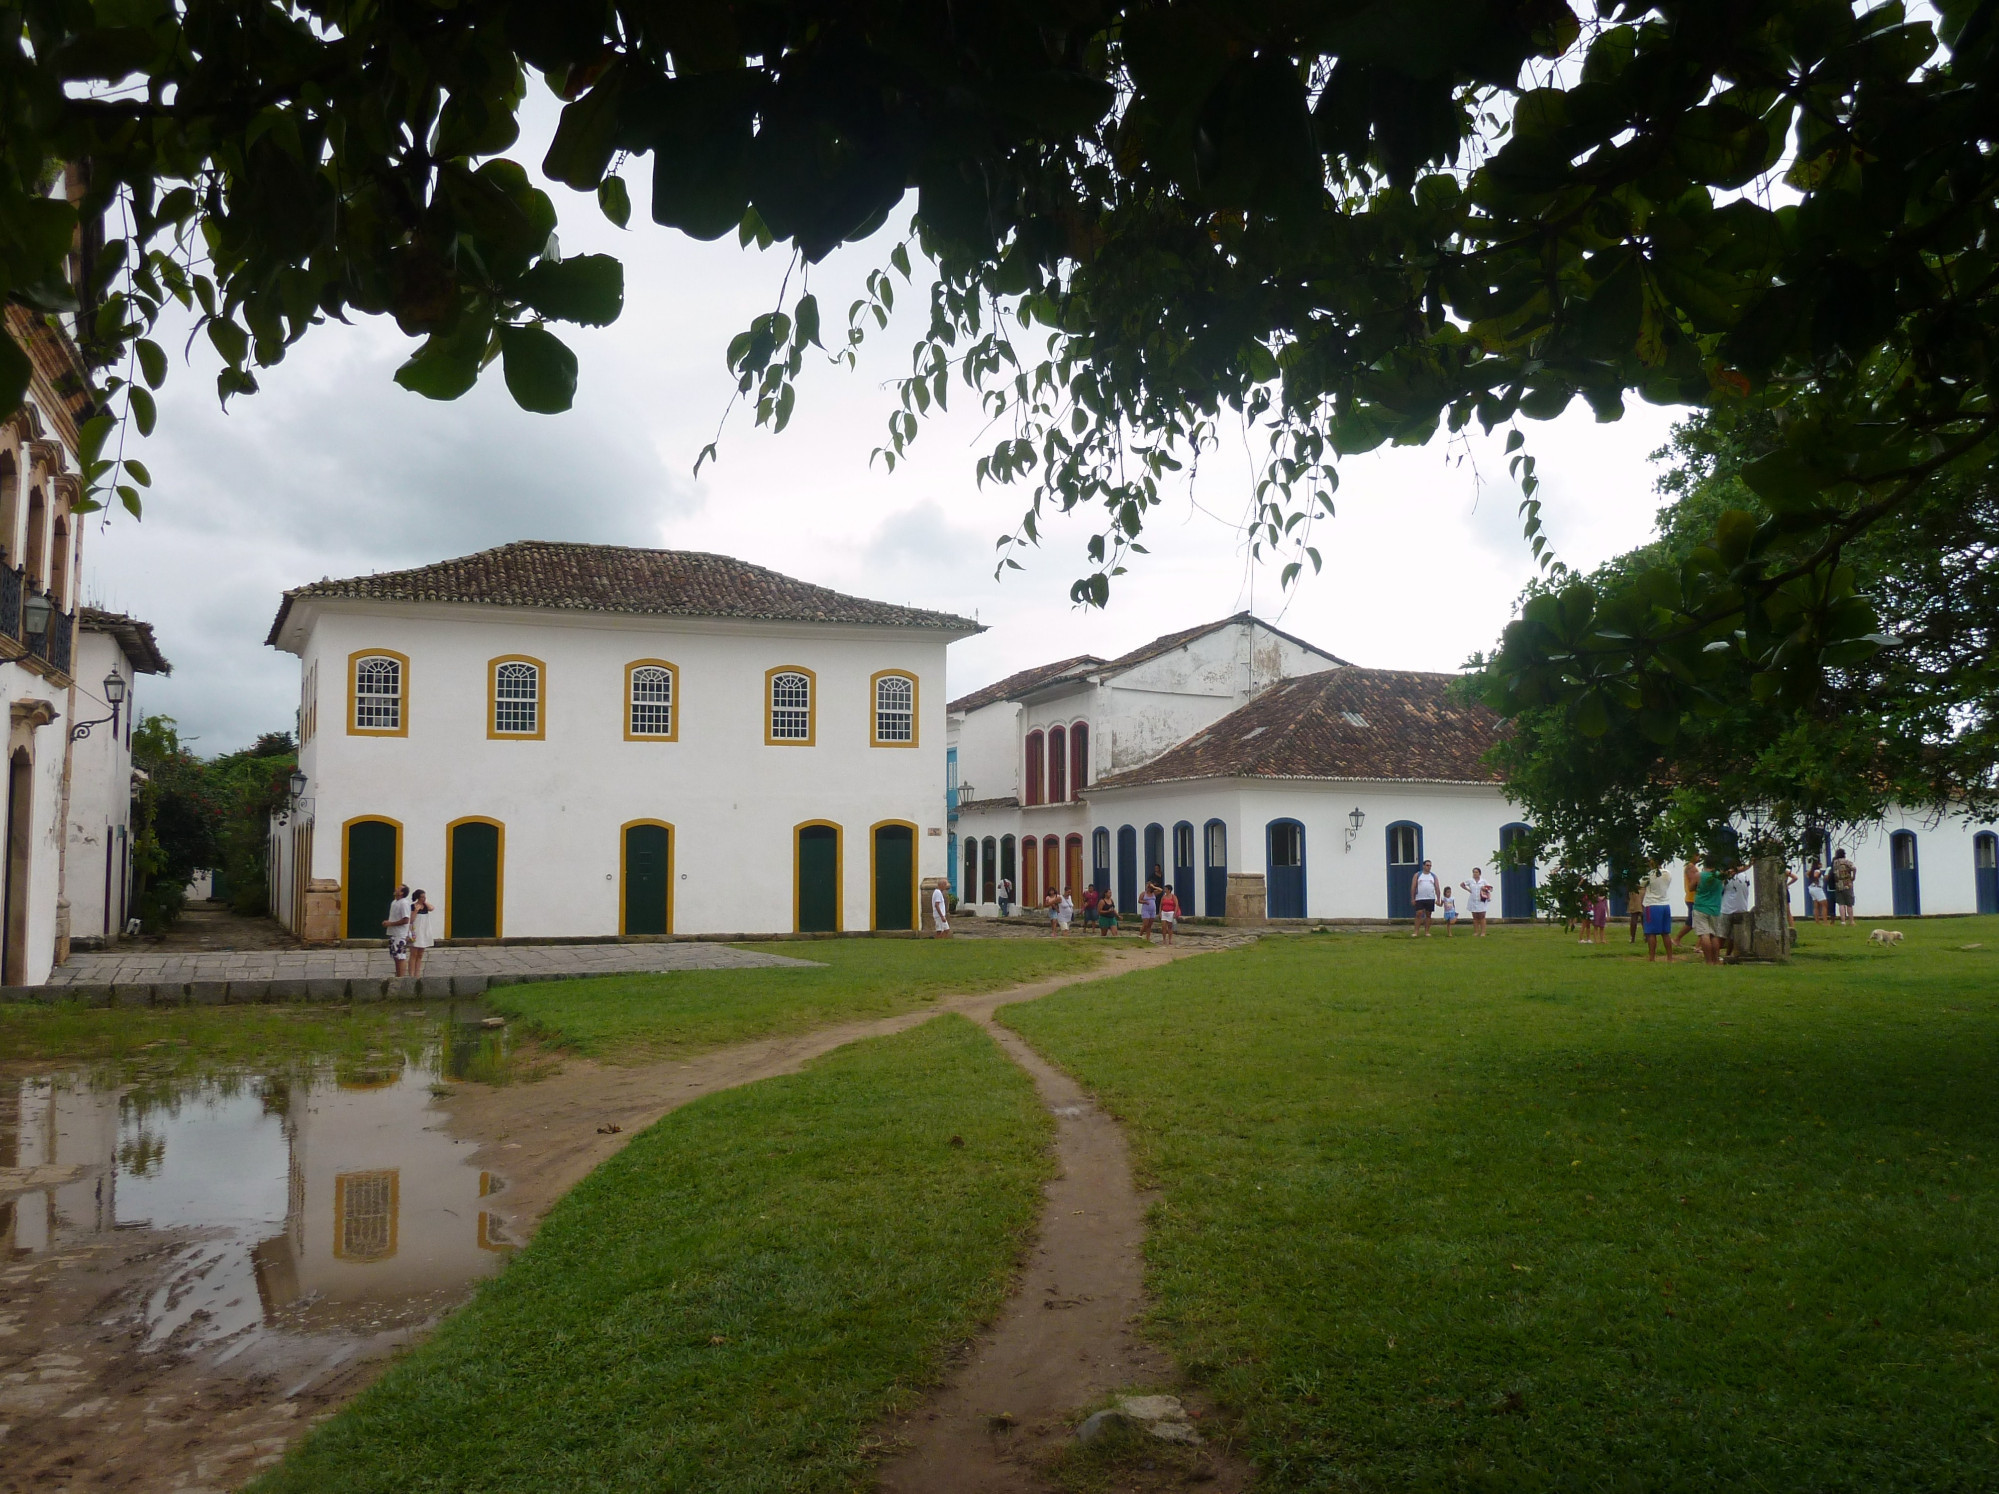 Centro Histórico de Paraty